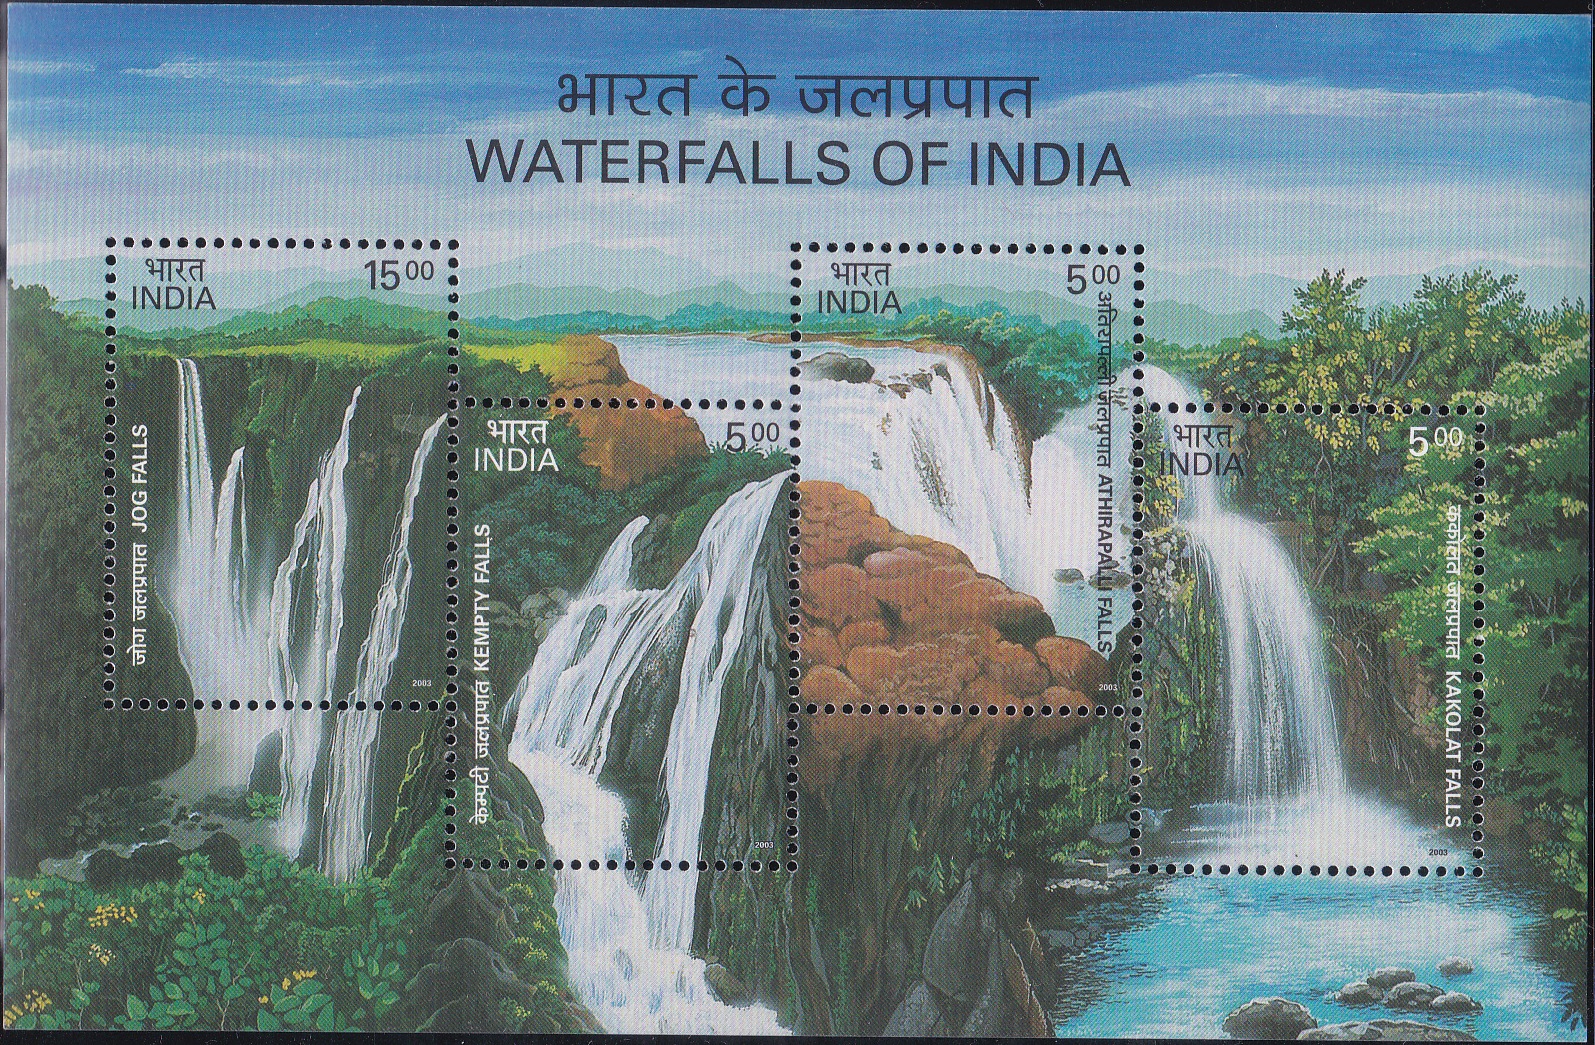 Athirappilly, Jog, Kempty & Kakolat falls